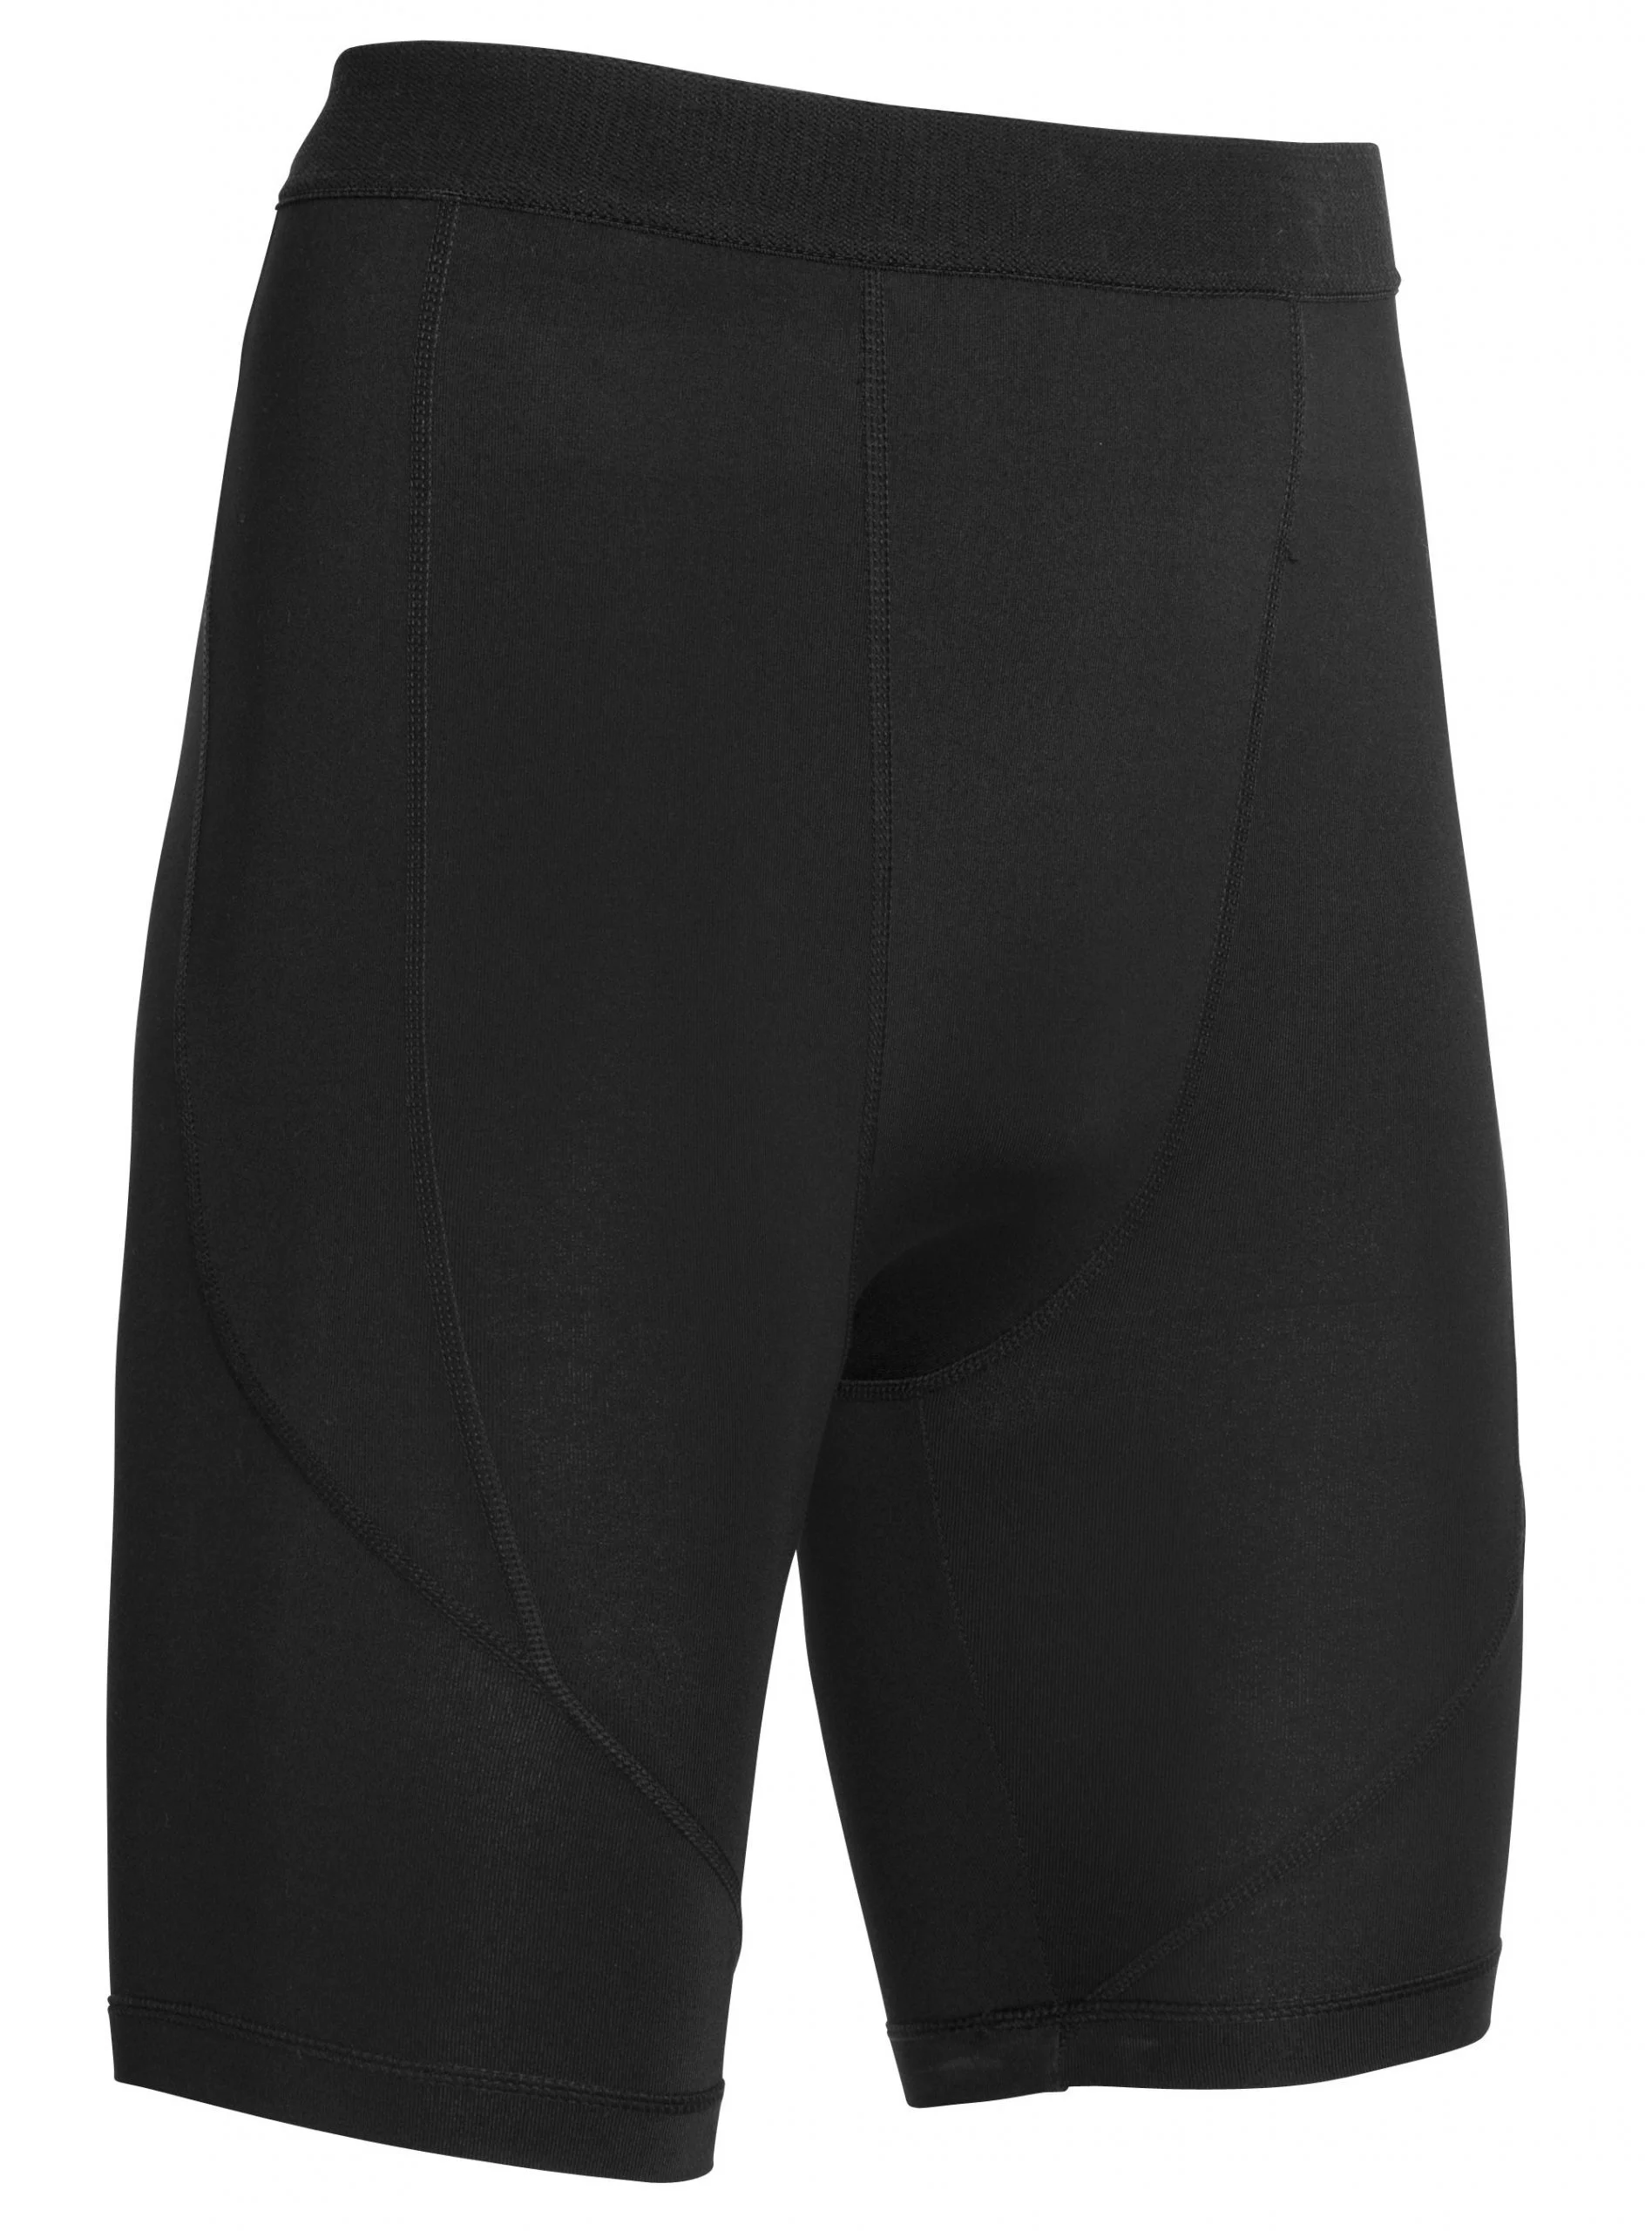 vulcan-sports-black-baselayer-shorts